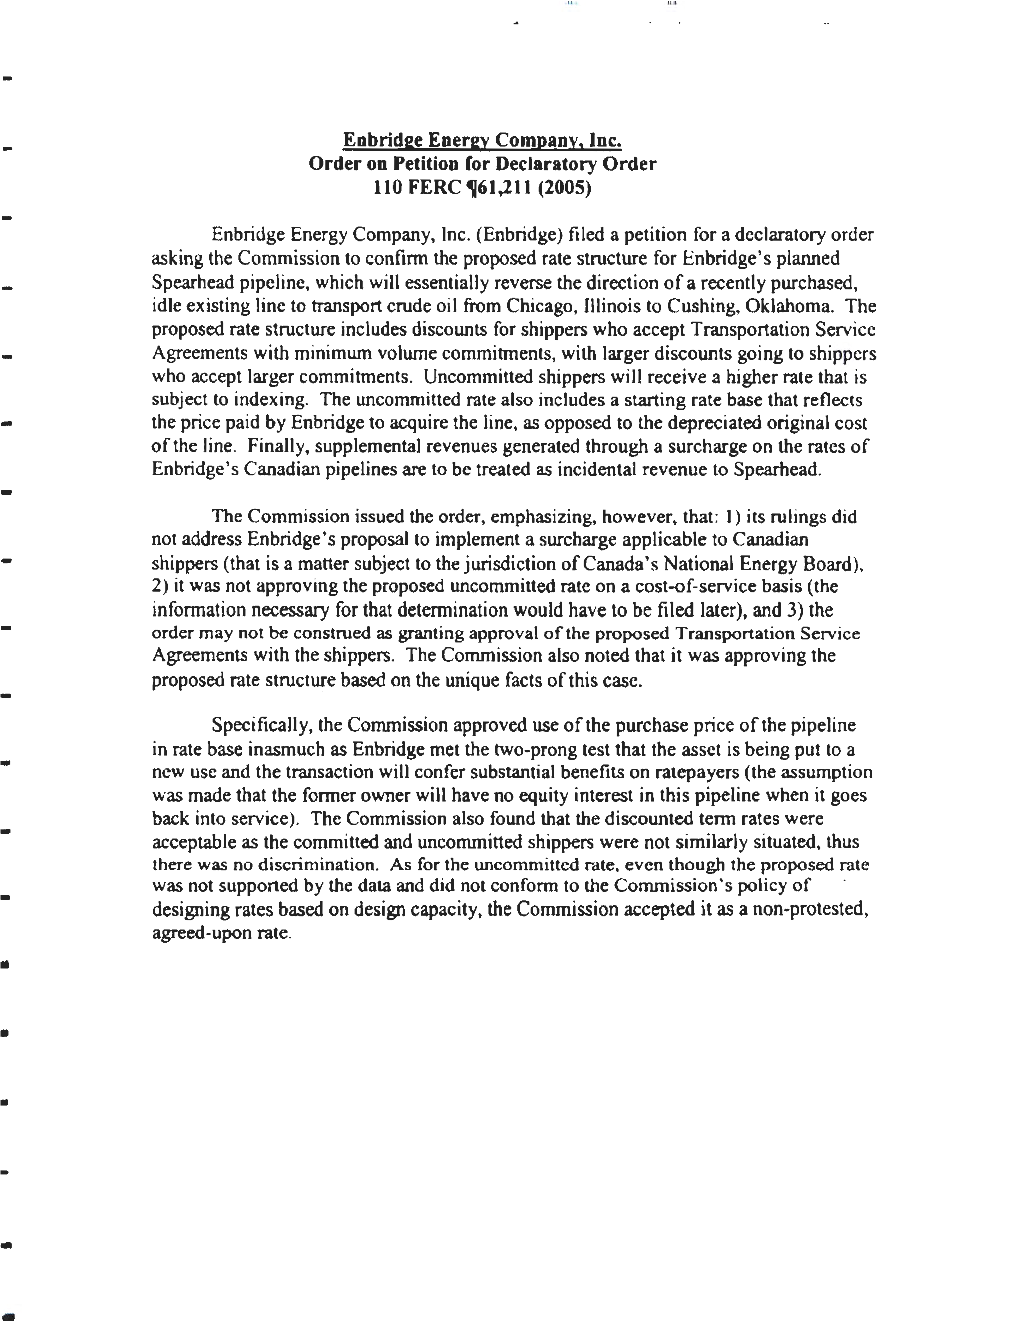 Enbridge Energy Company, Inc. Order on Petition for Declaratory Order 110 FERC '161)11 (2005)